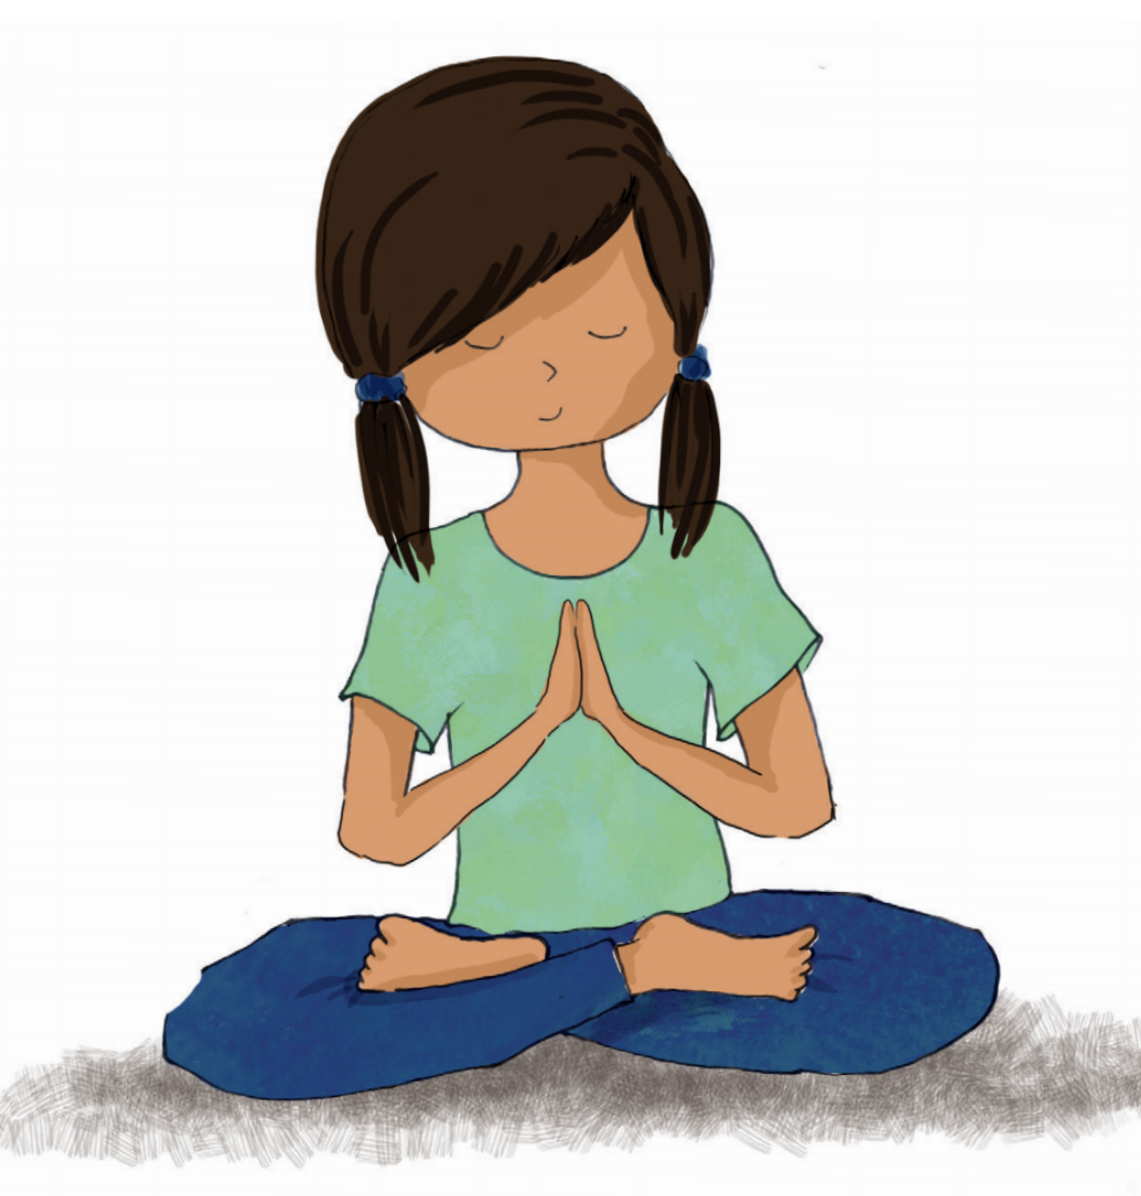 Padmasana: Opening The Hips & Heart With Meditation | The Yogi Movement